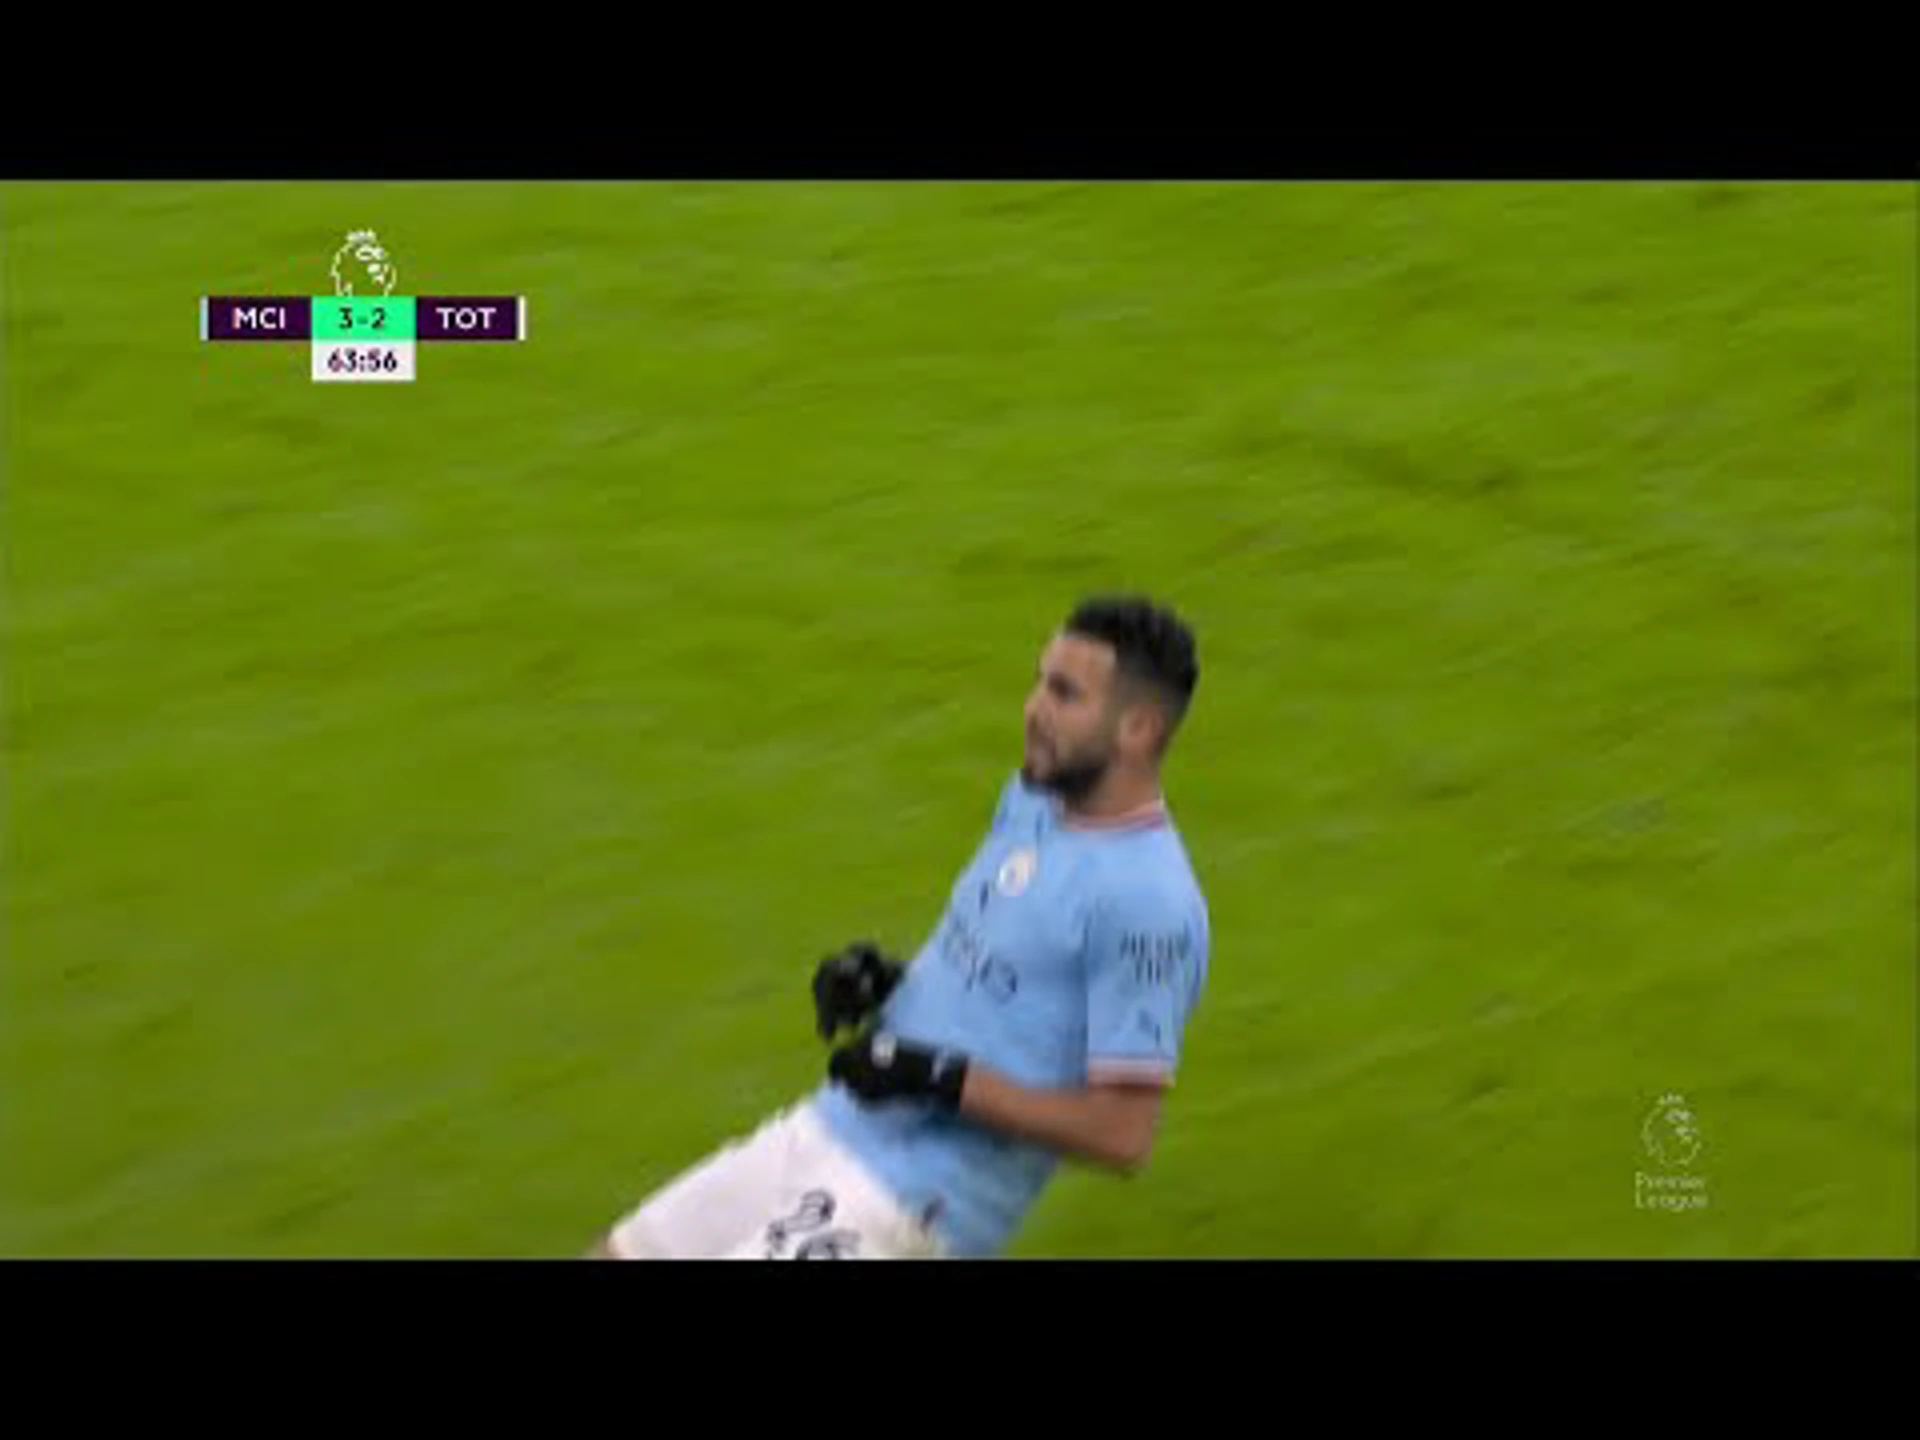 Riyad Mahrez with a Spectacular Goal vs. Tottenham Hotspur